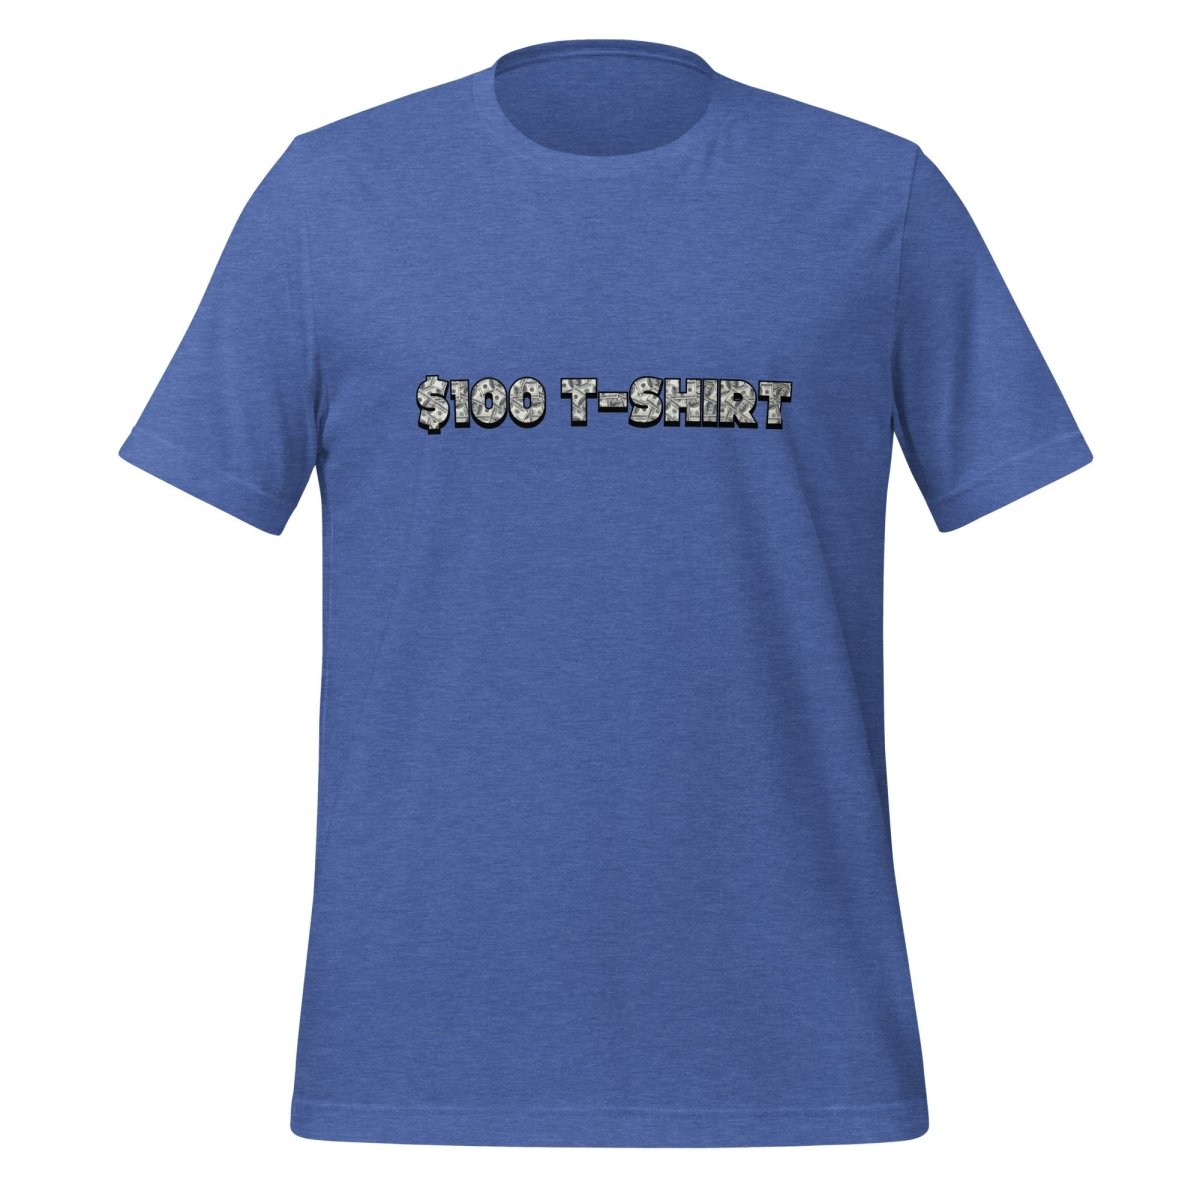 $100 T - Shirt (unisex) - AI Store